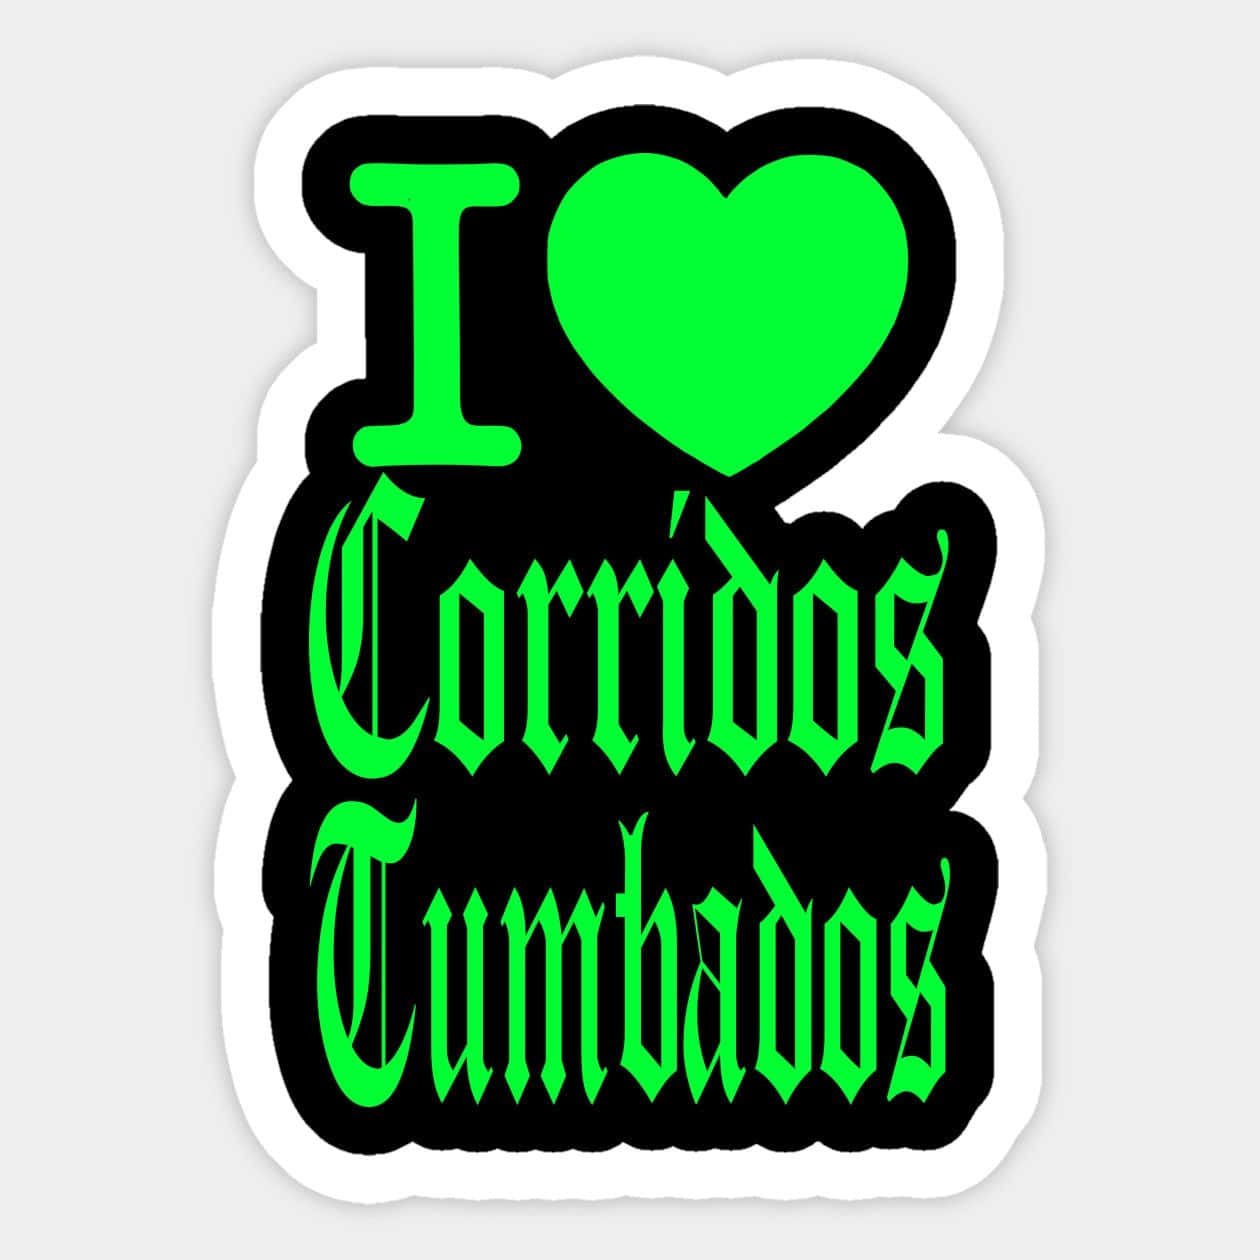 I Love Corridos Tumbados Sticker Wallpaper